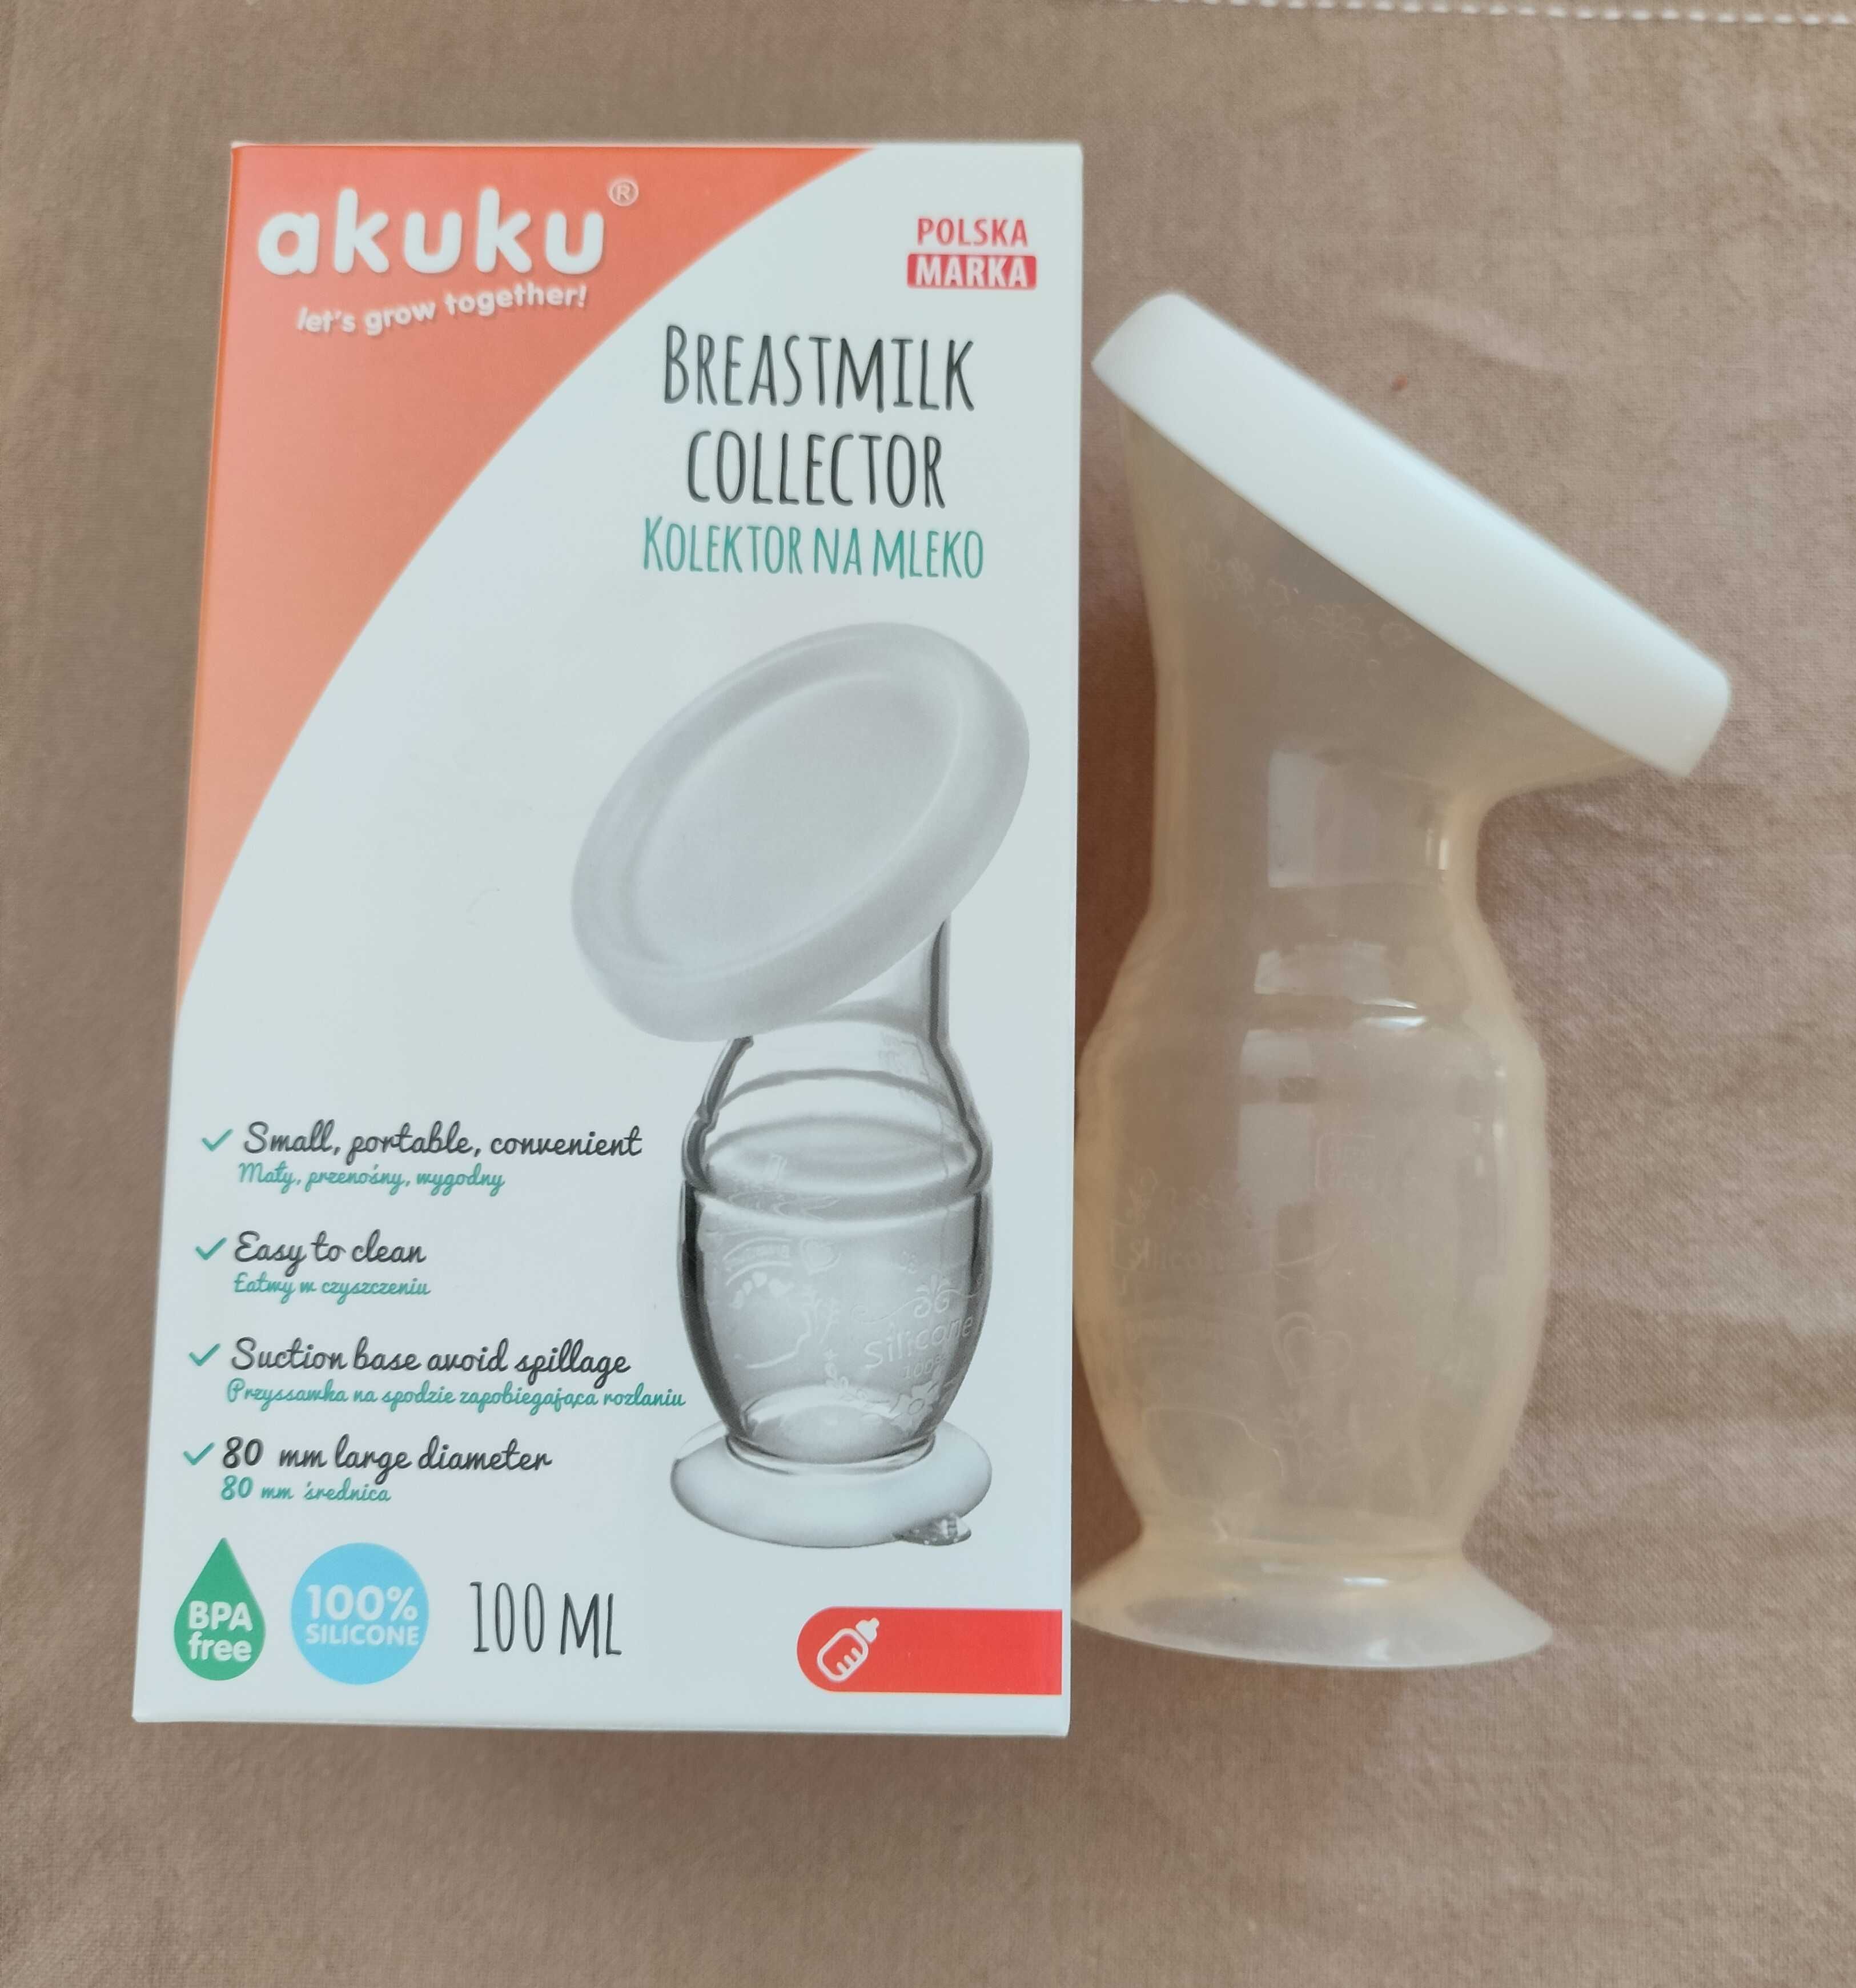 Akuku_kolektor na mleko, silikonowy zbiornik na pokarm